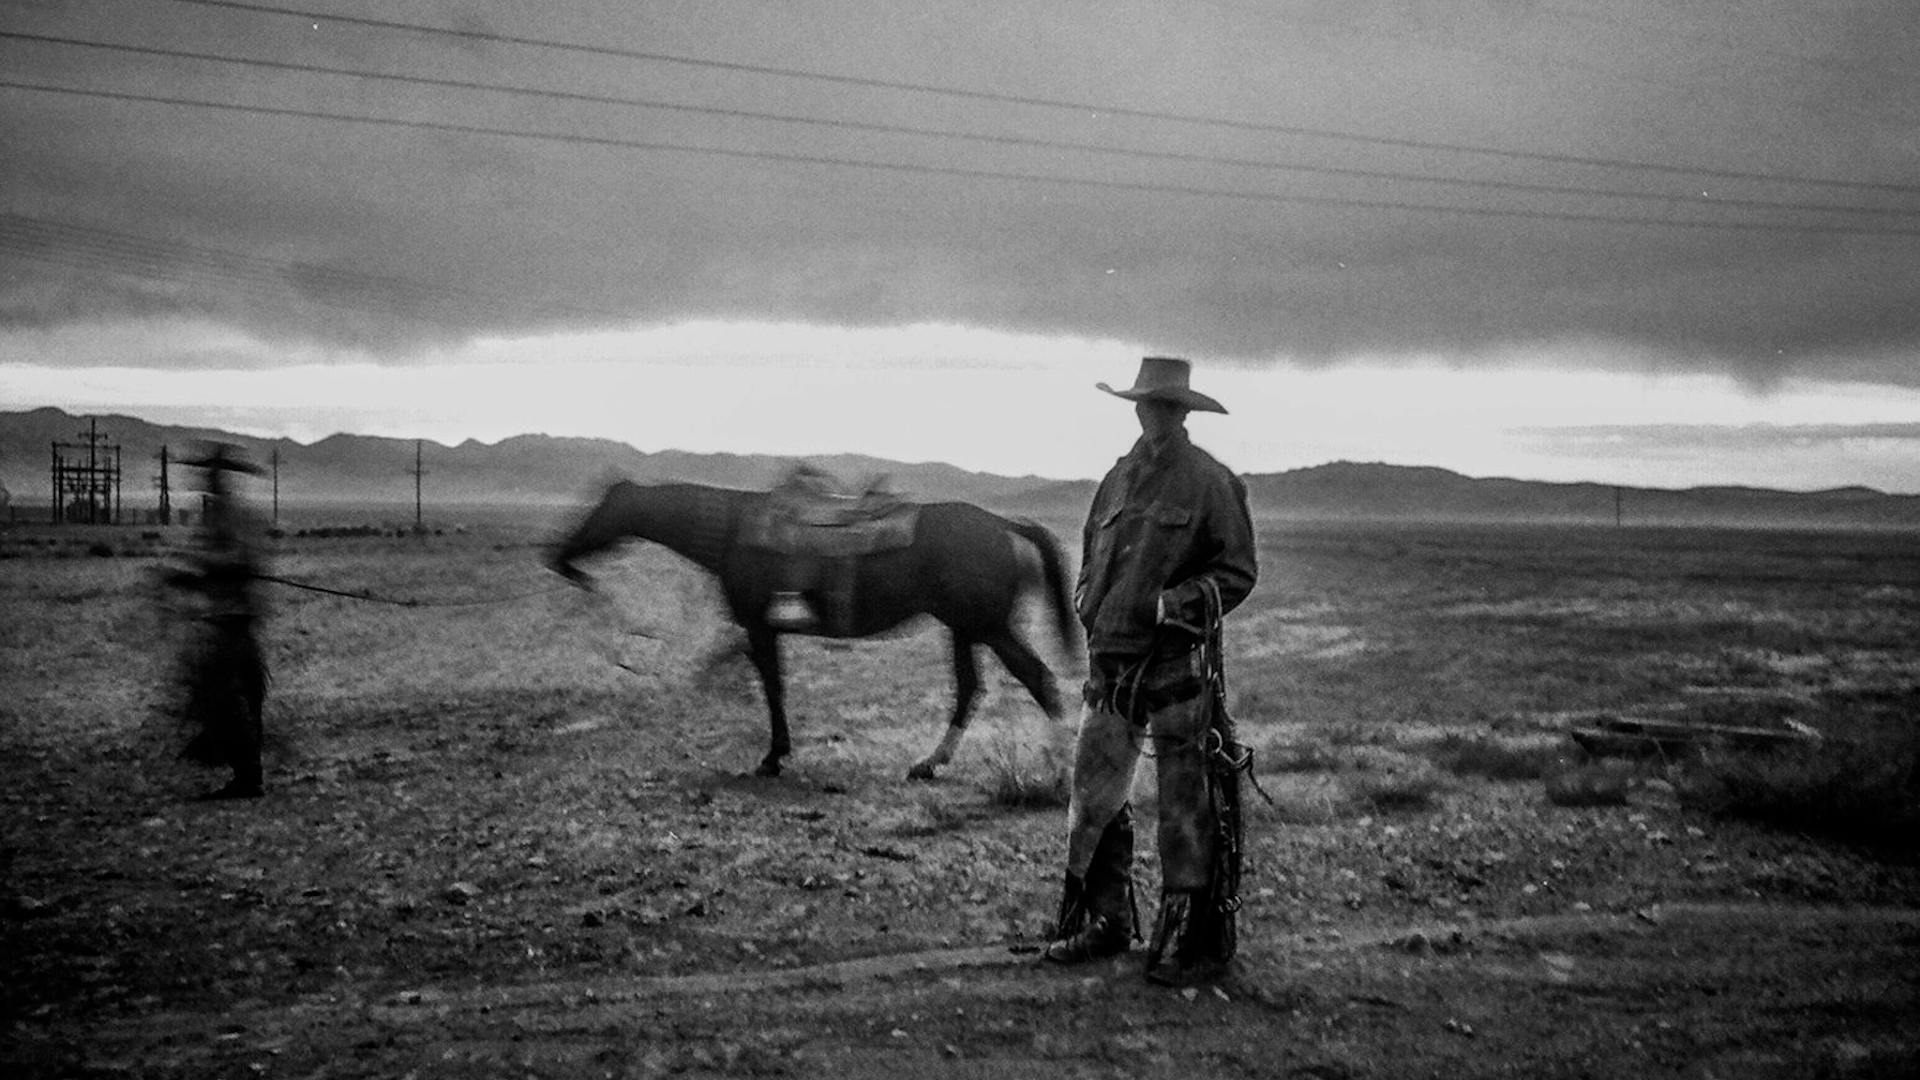 Cowboys: A Documentary Portrait